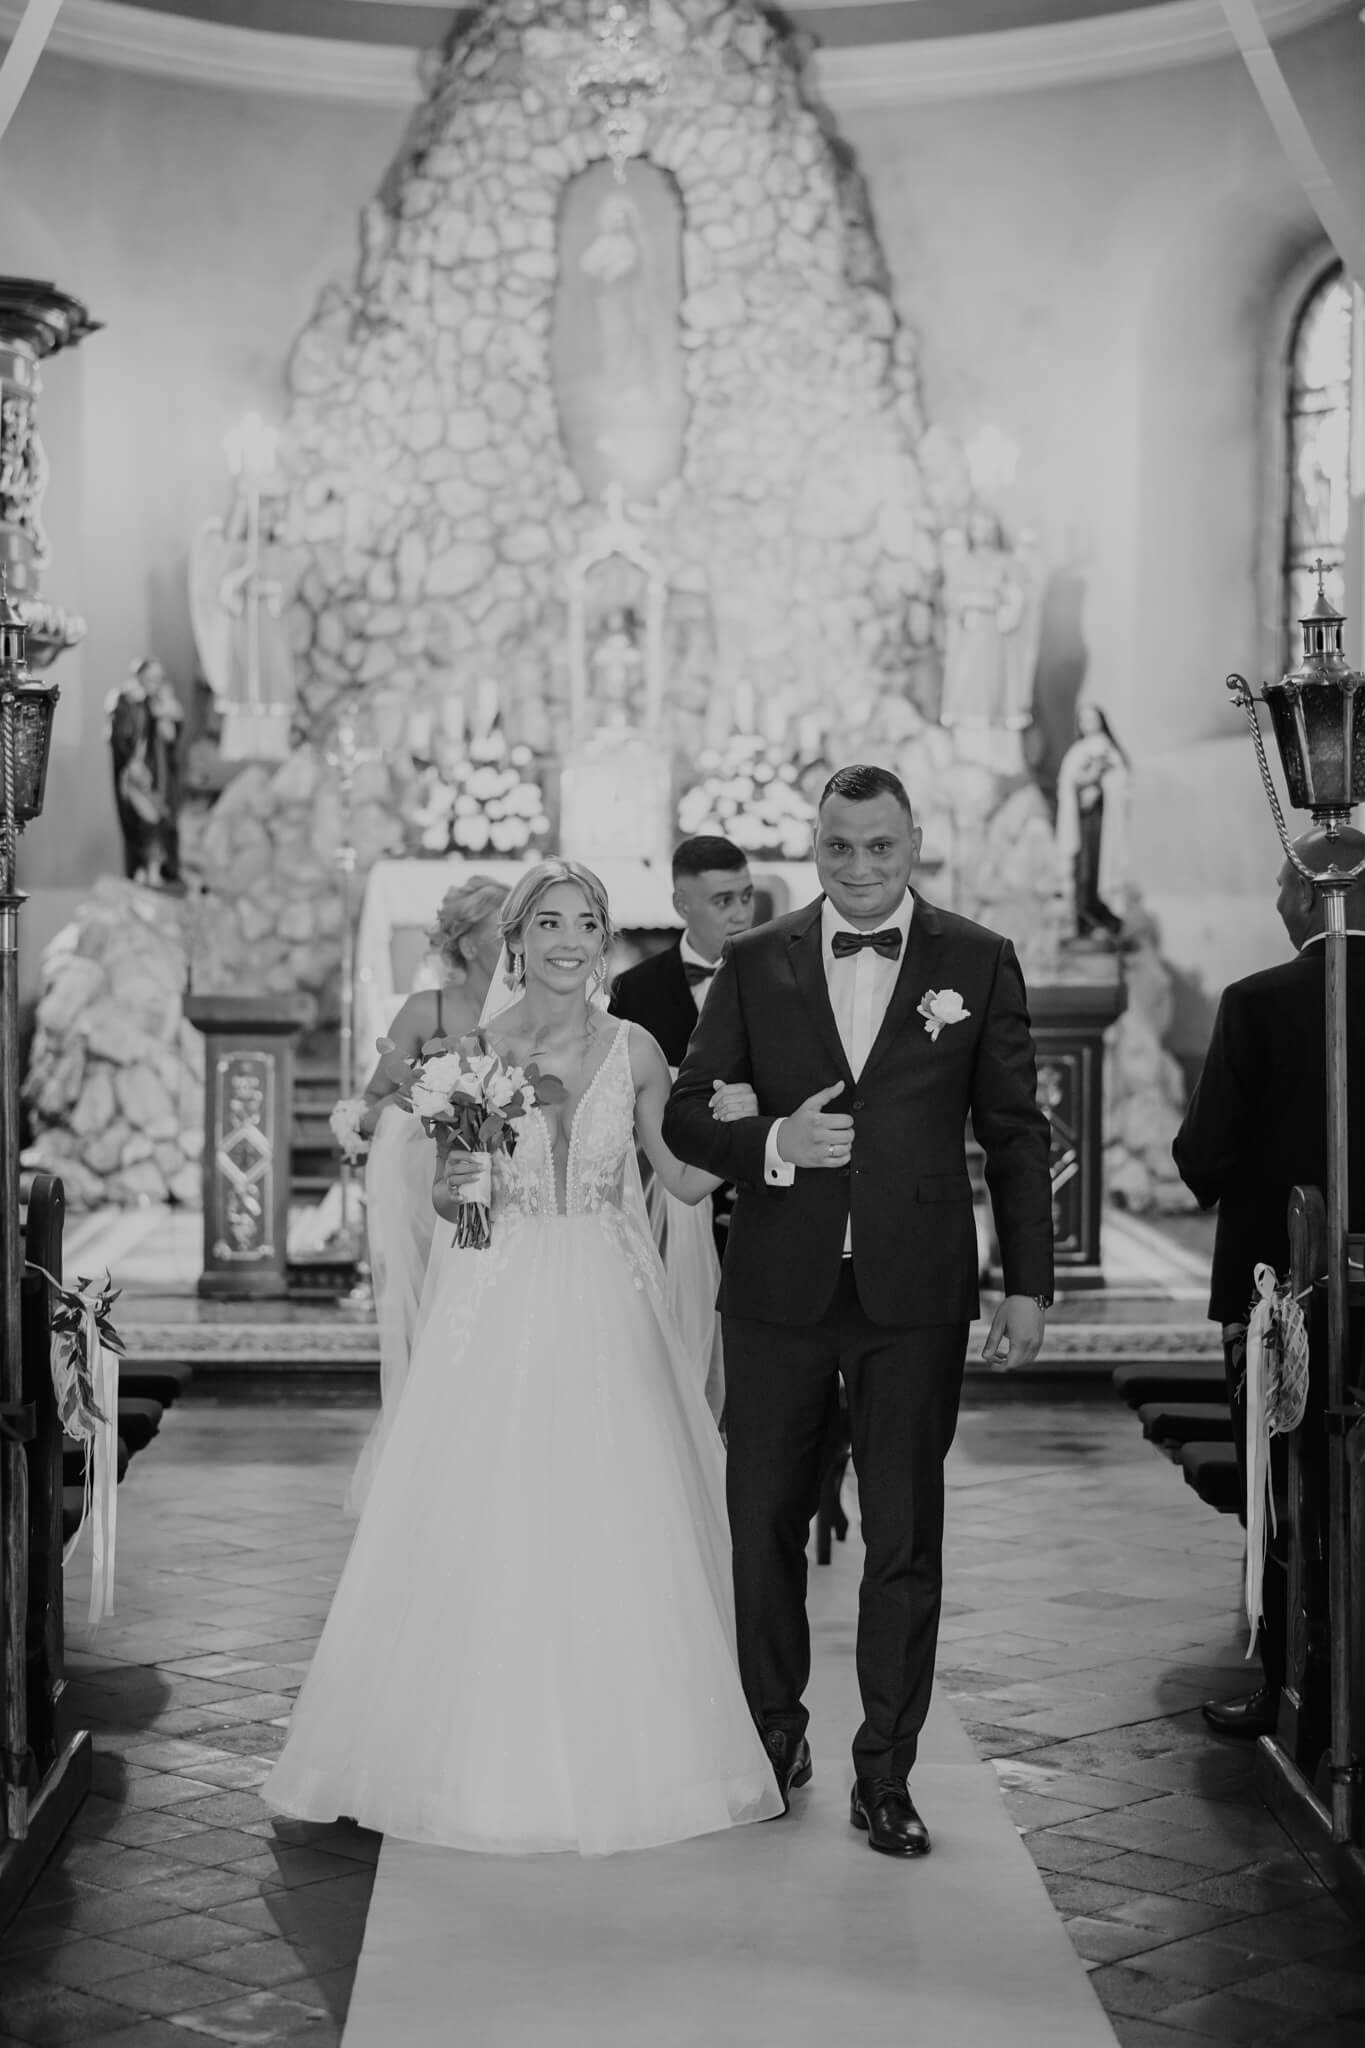 Marlena & Mateusz - ślub na Śląsku - fotografia #21